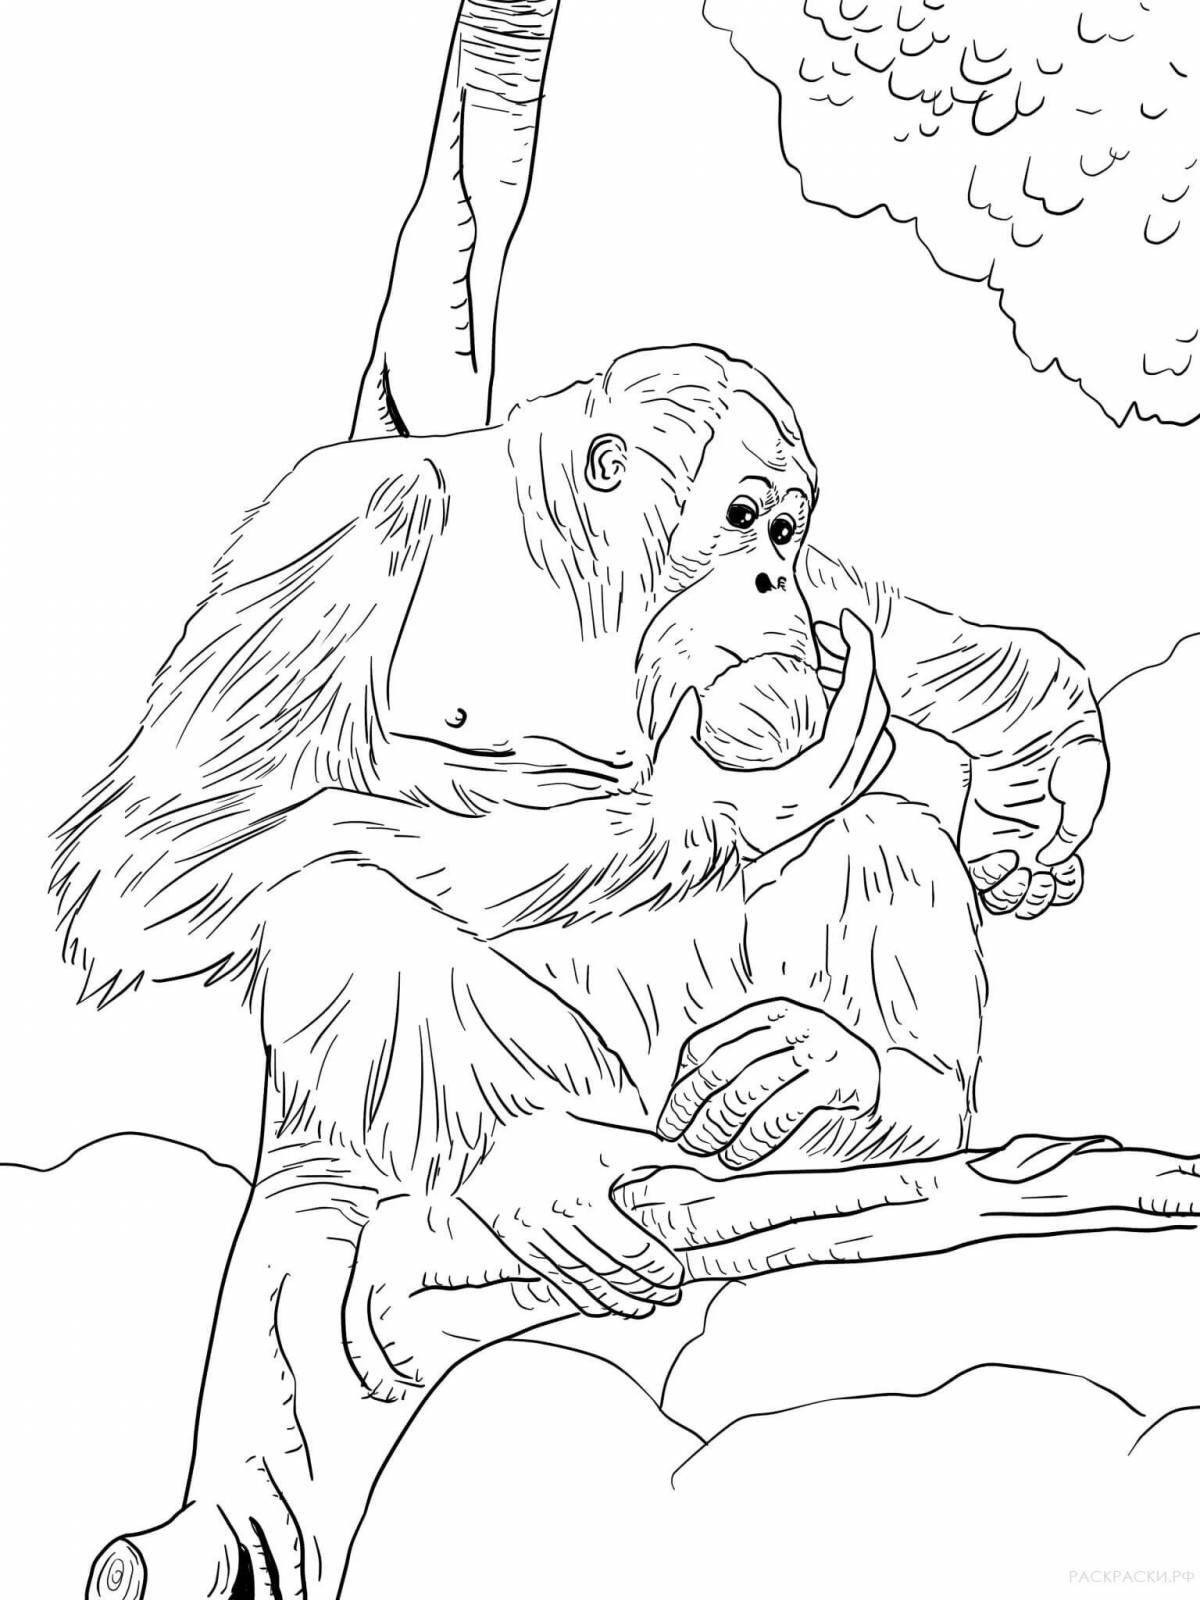 Coloring page gorgeous orangutan